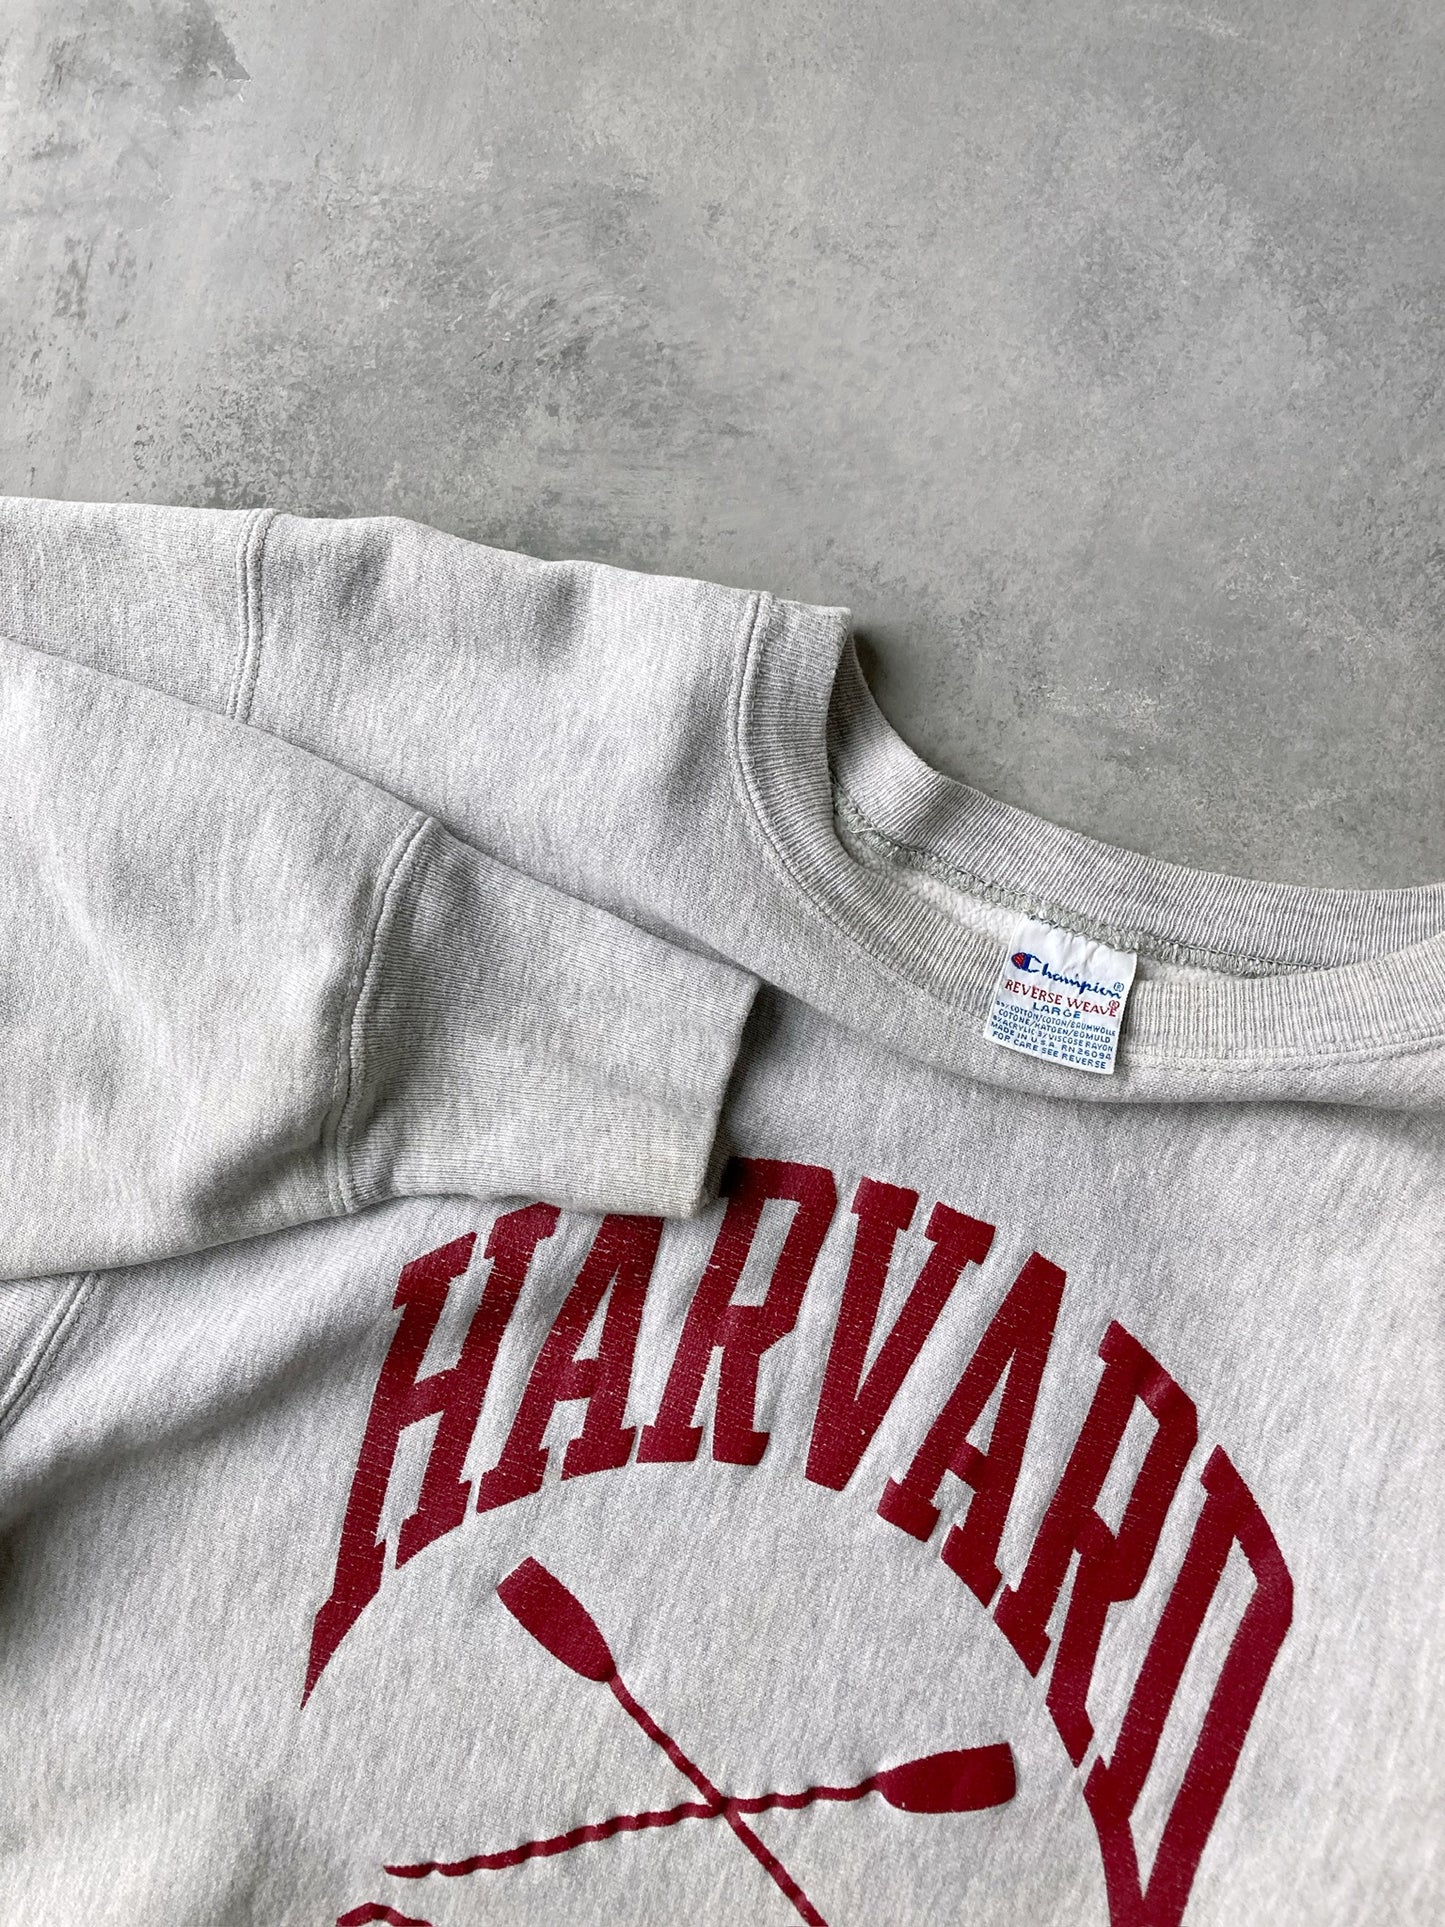 Harvard University Crew Sweatshirt 90's - Large